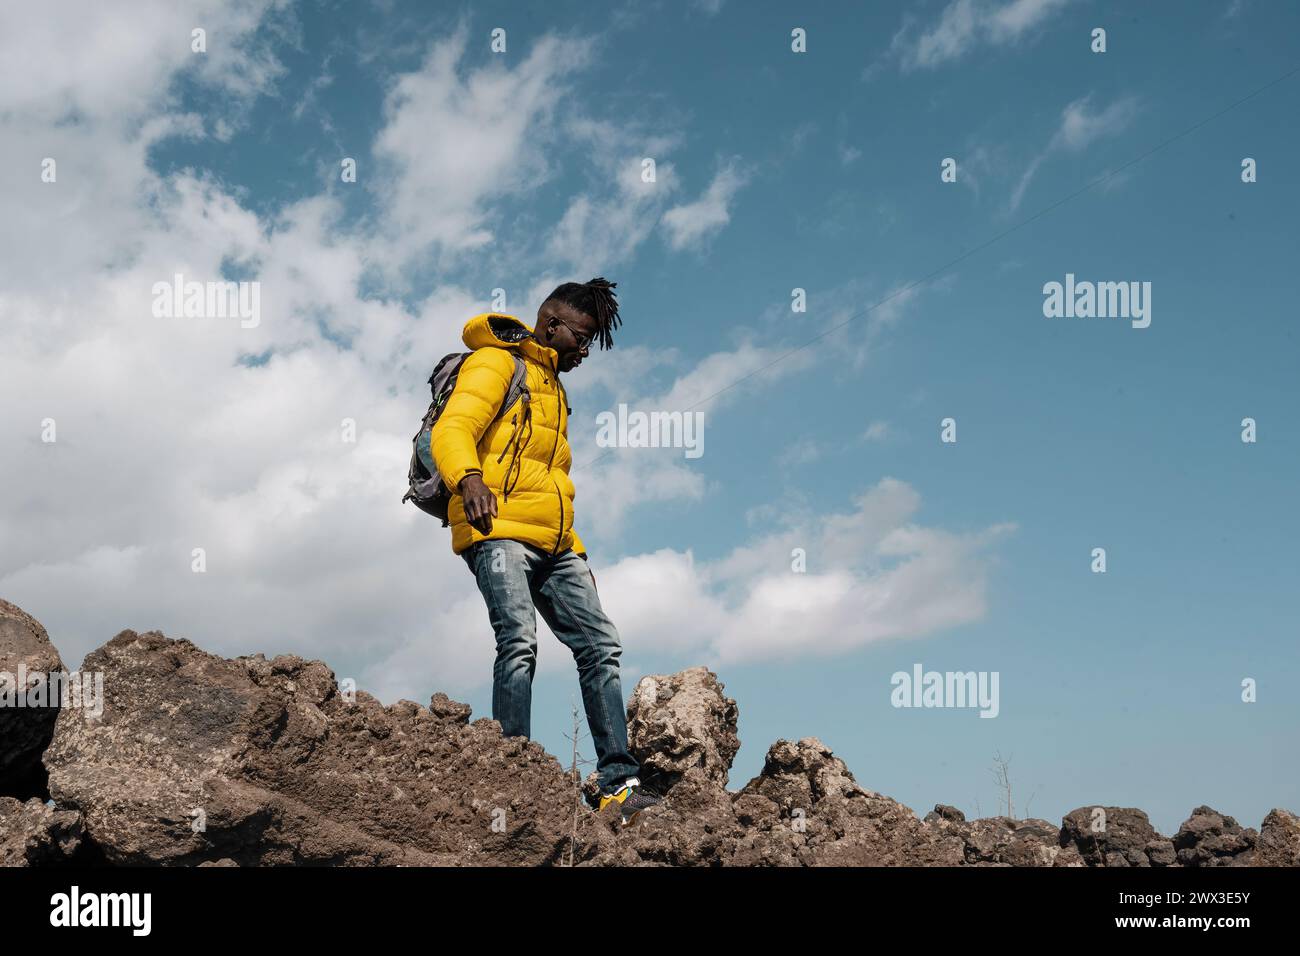 Junger Mann mit leuchtender gelber Jacke - Wandern felsige Landschaft, Abenteuermode - klarer Himmel, Outdoor-Erkundung - Kopierraum. Stockfoto